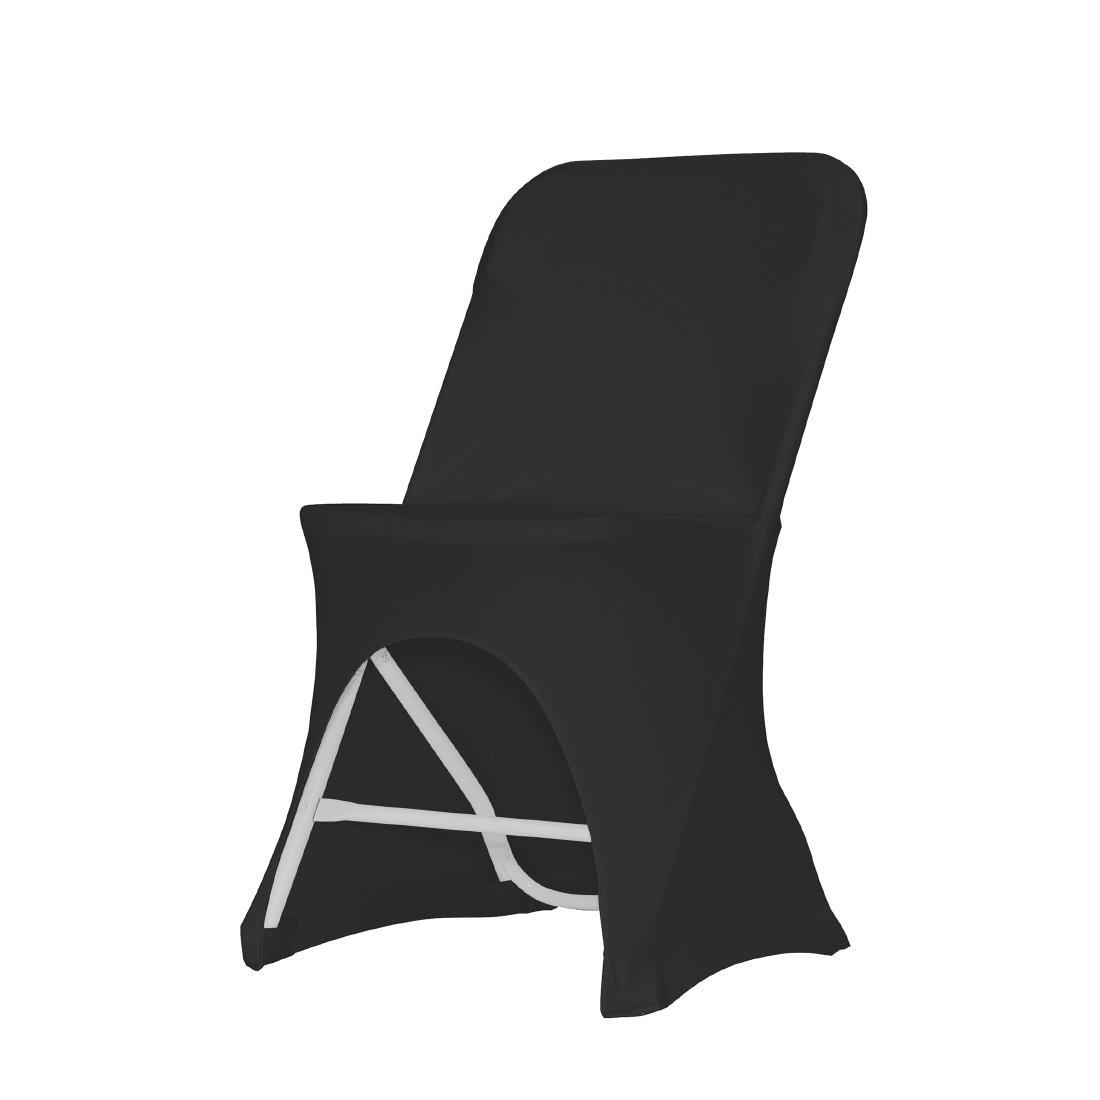 DW843 - ZOWN Alex-K Side Chair Stretch Cover Black - DW843